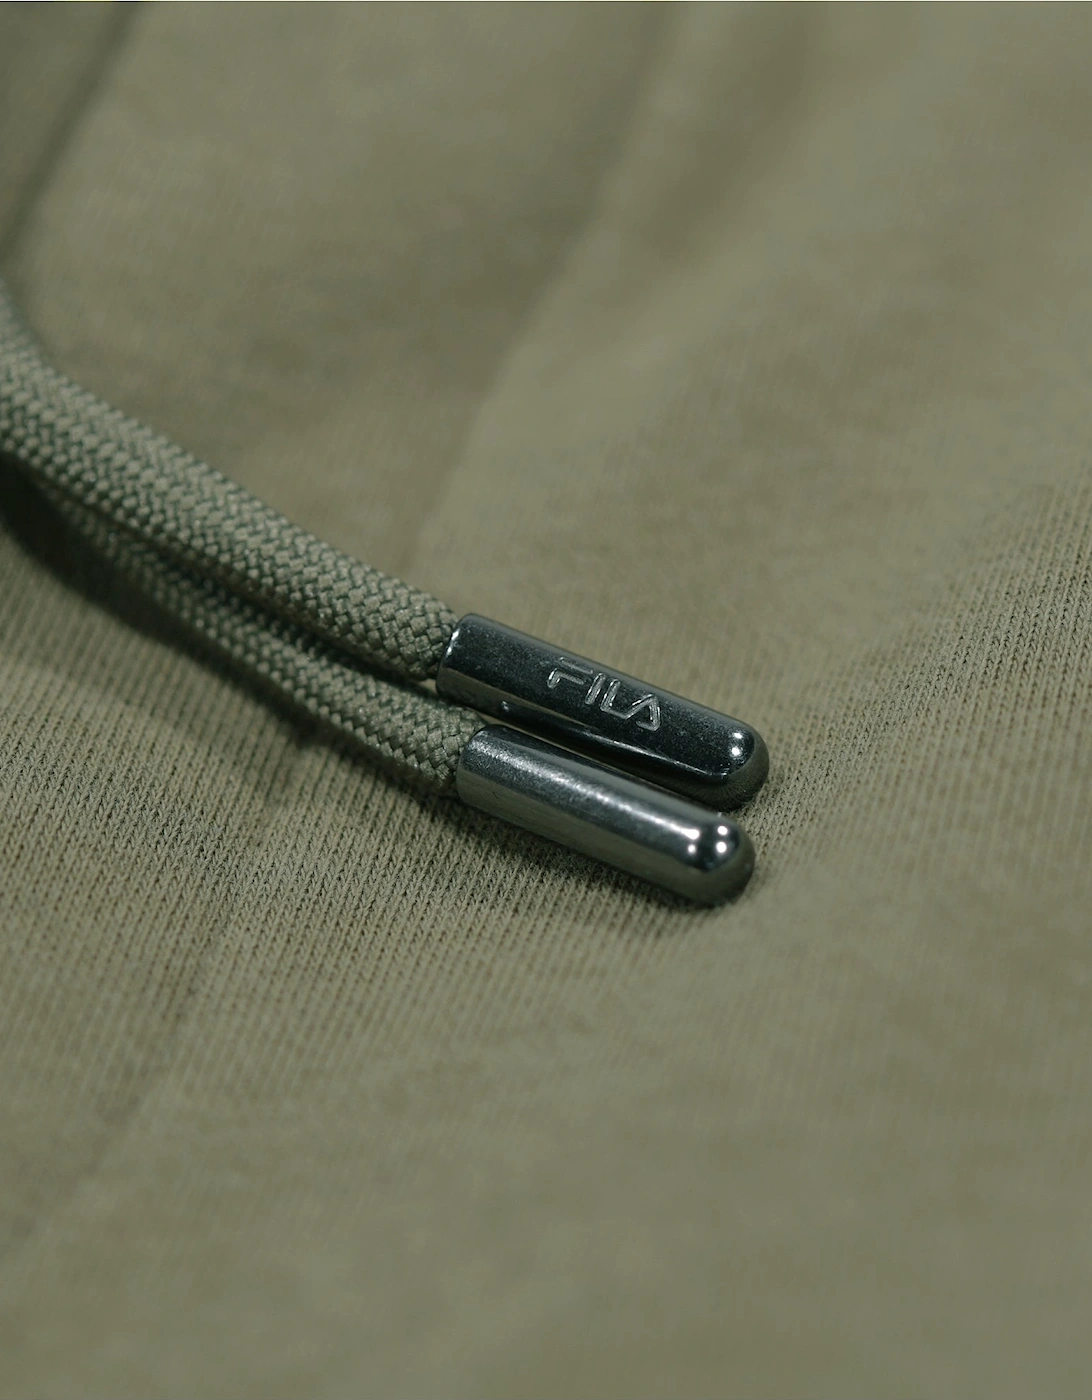 Stu 2 Cut n Sew Logo Jog Shorts | Olive/Khaki/Cement